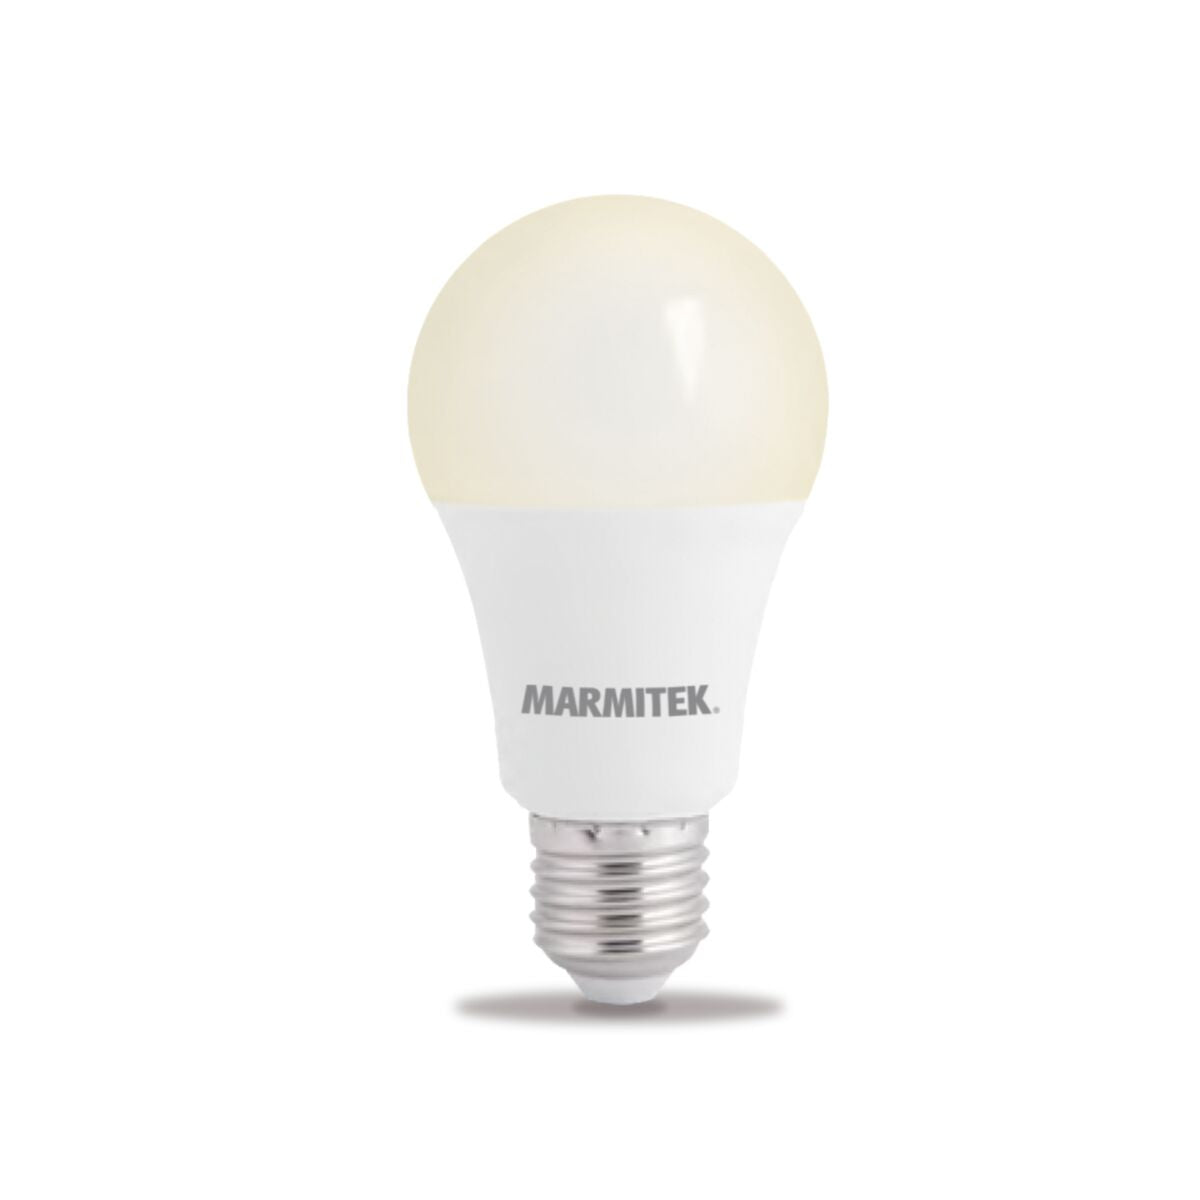 Glow ME - Smart bulb - E27 - Control via app - White